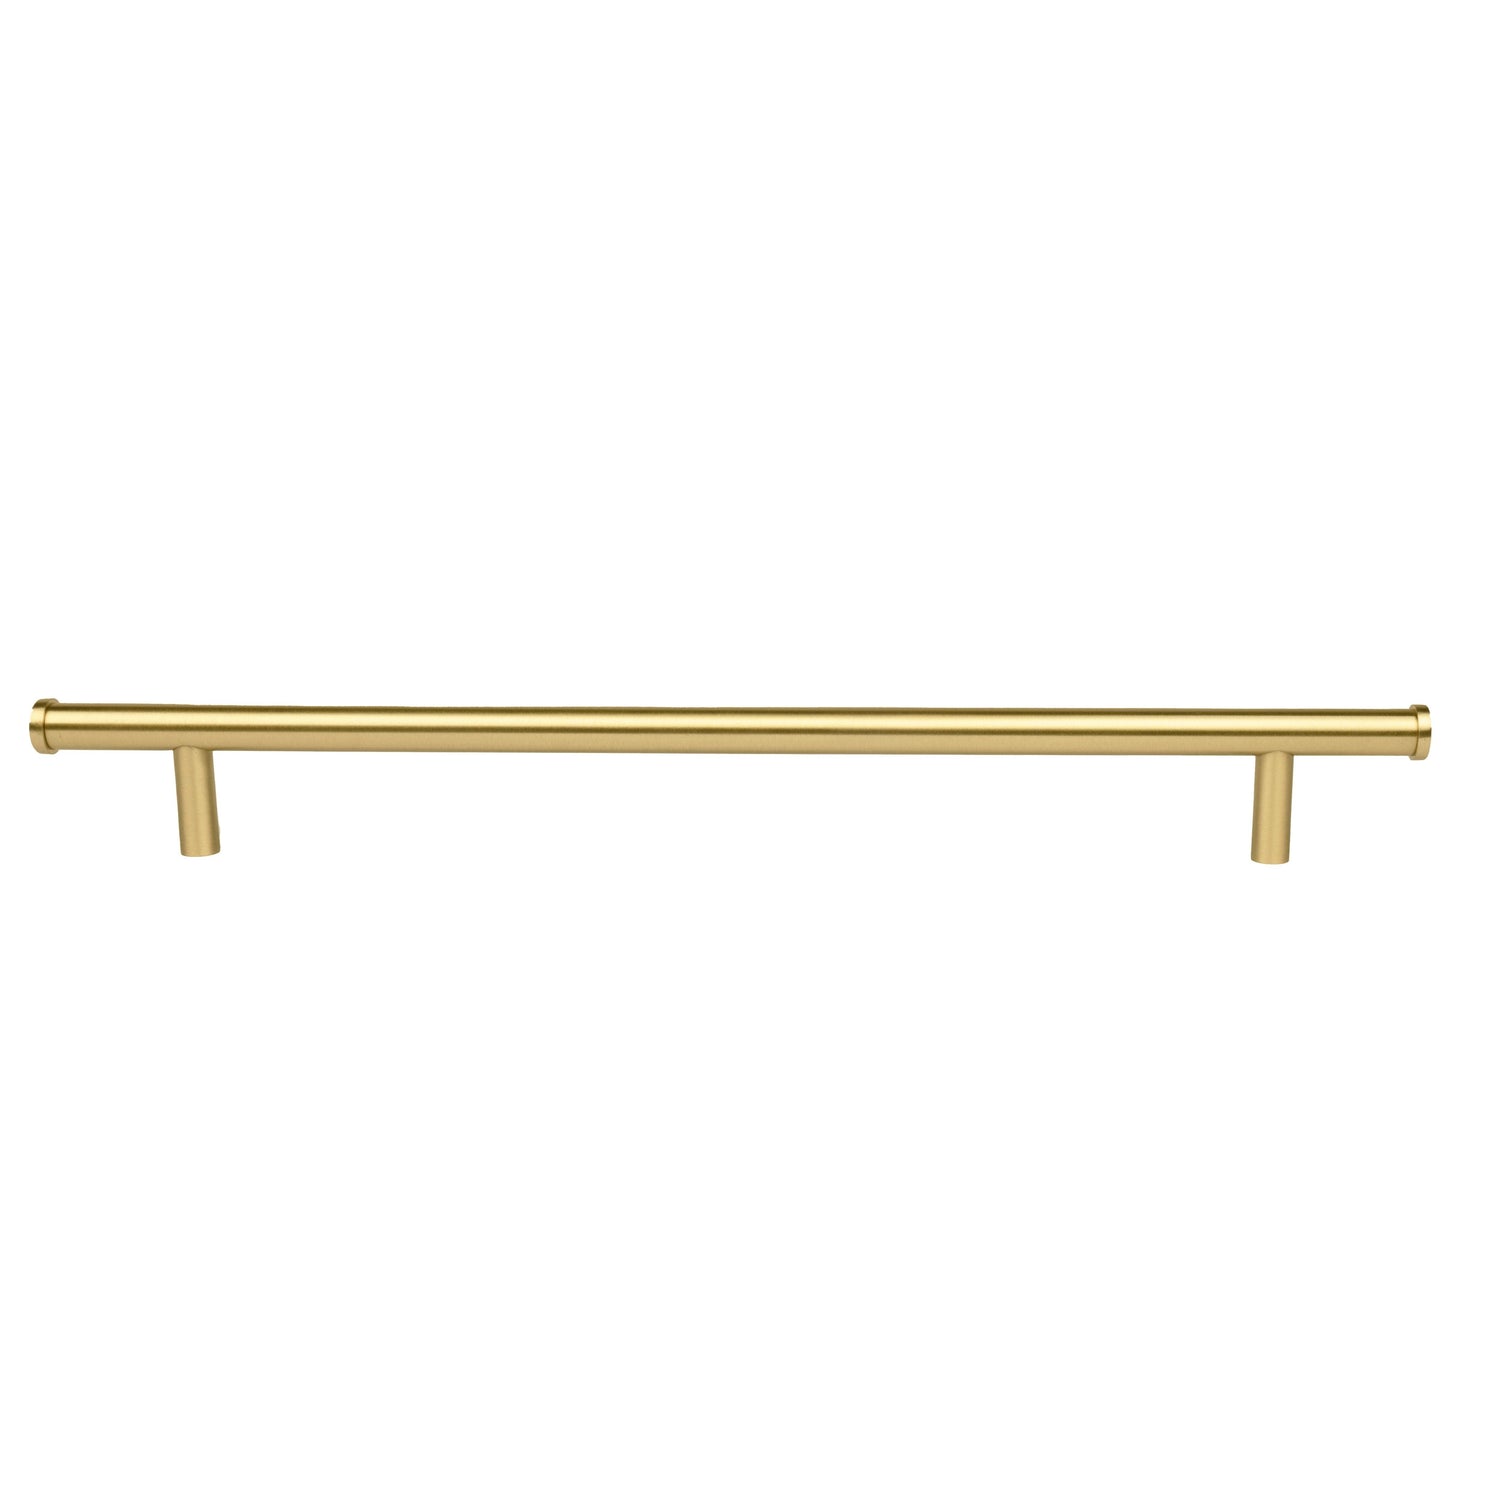 Eleanora T Bar Handle Handles 270mm / Gold / Brass - M A N T A R A